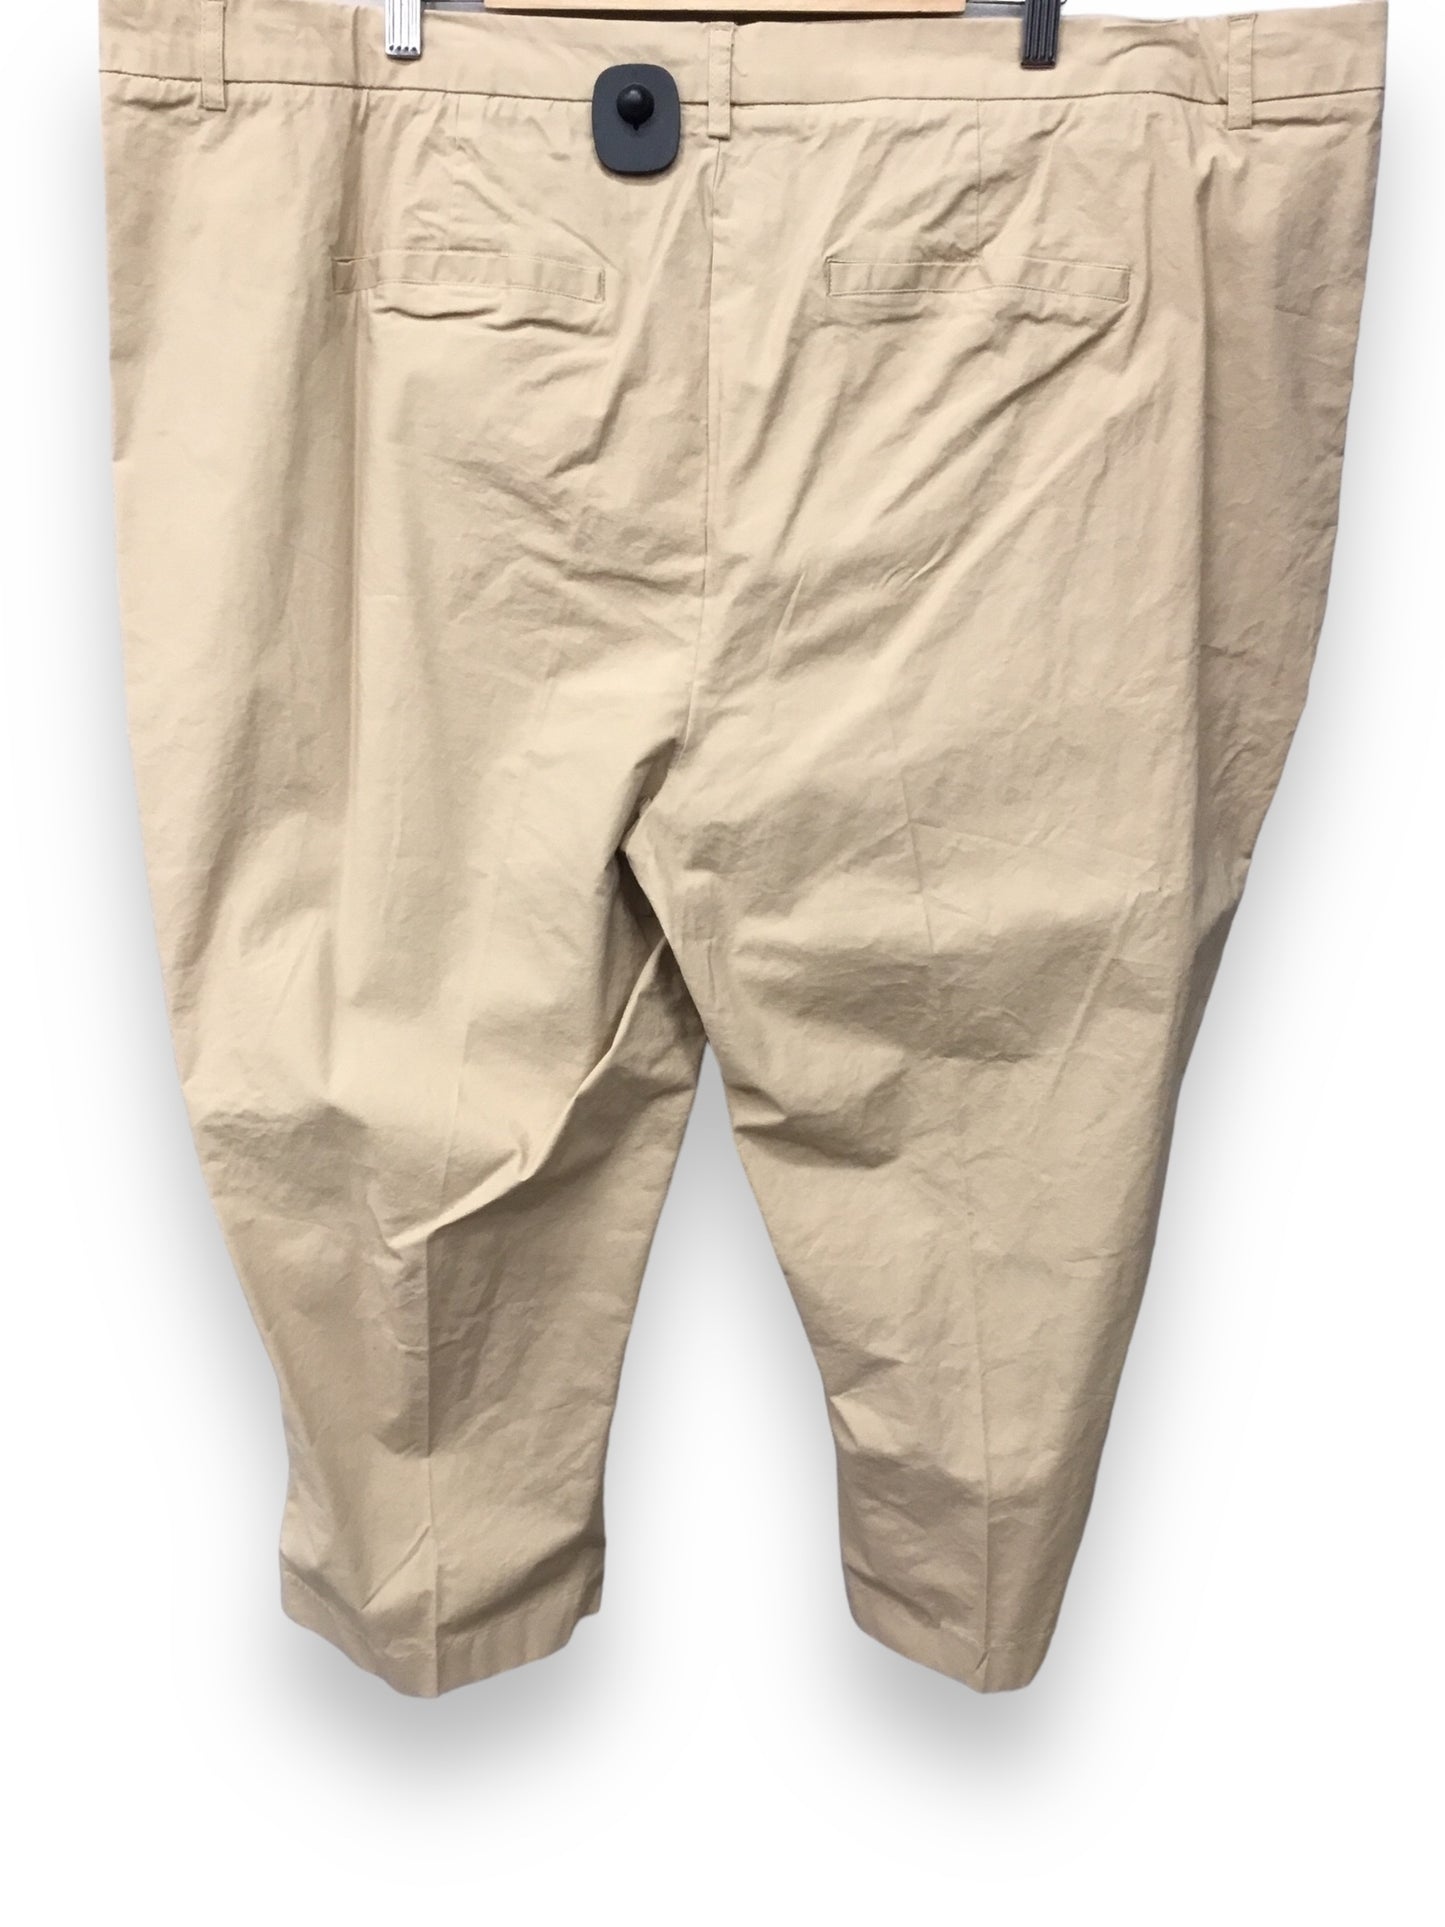 Pants By Jessica London  Size: 4x